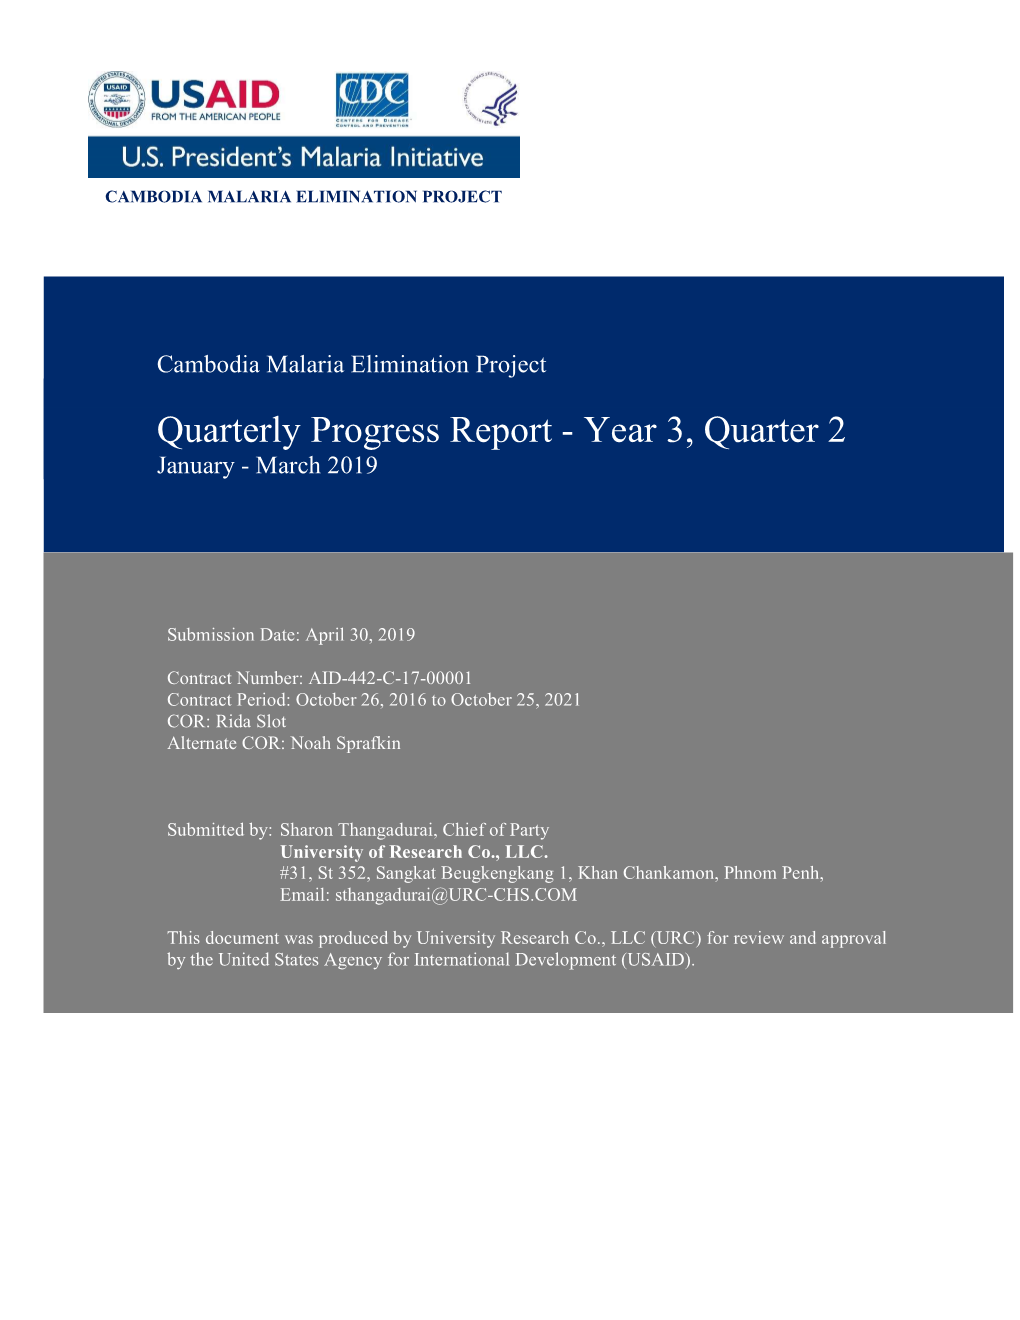 Quarterly Progress Report - Year 3, Quarter 2 January - March 2019